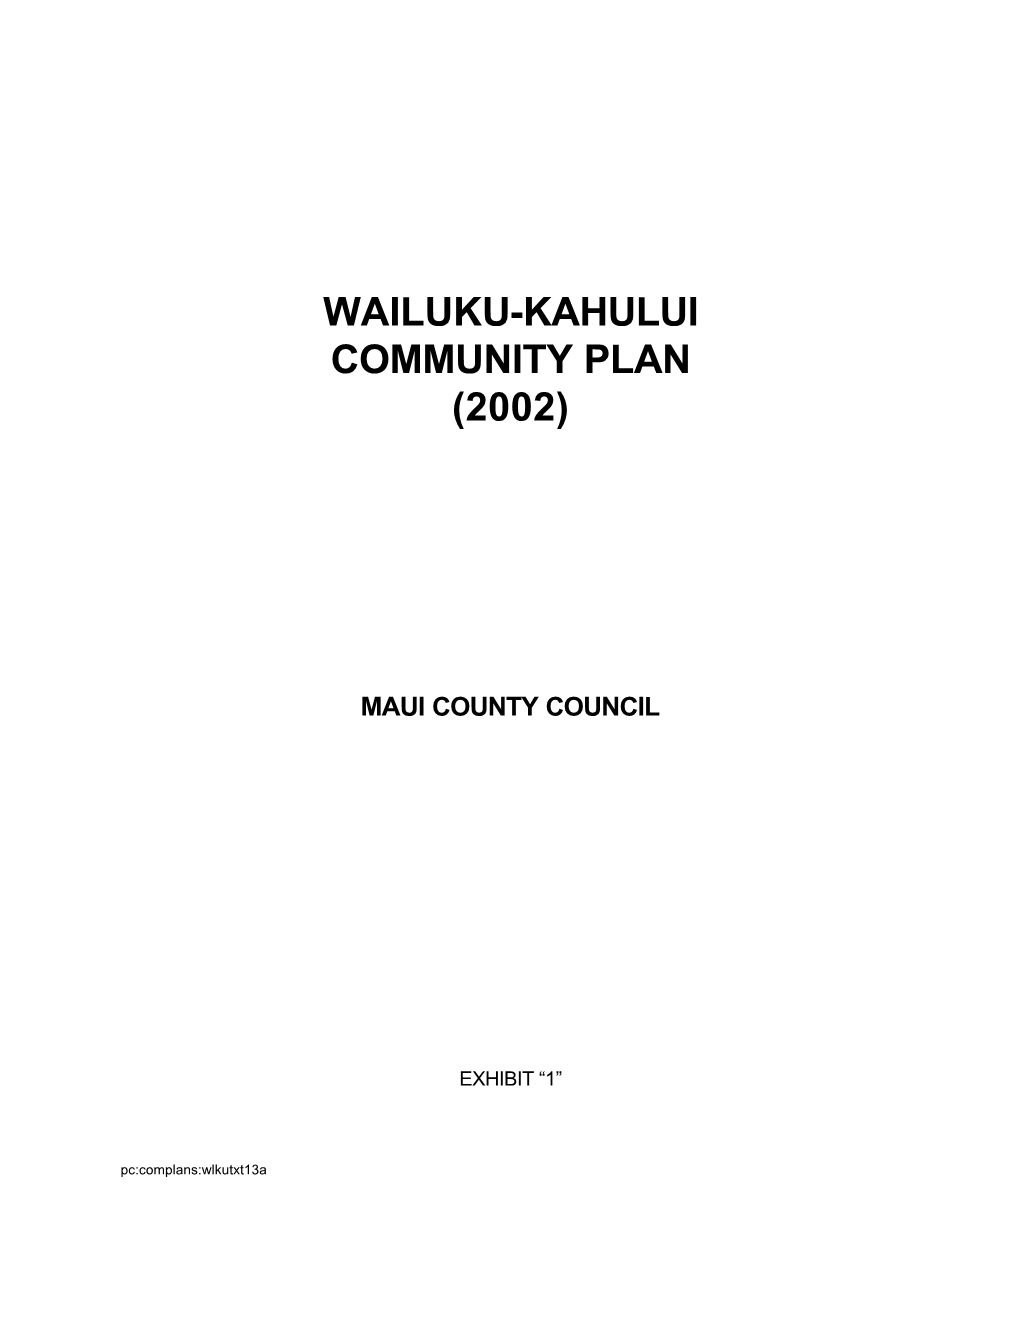 Wailuku-Kahului Community Plan (2002)